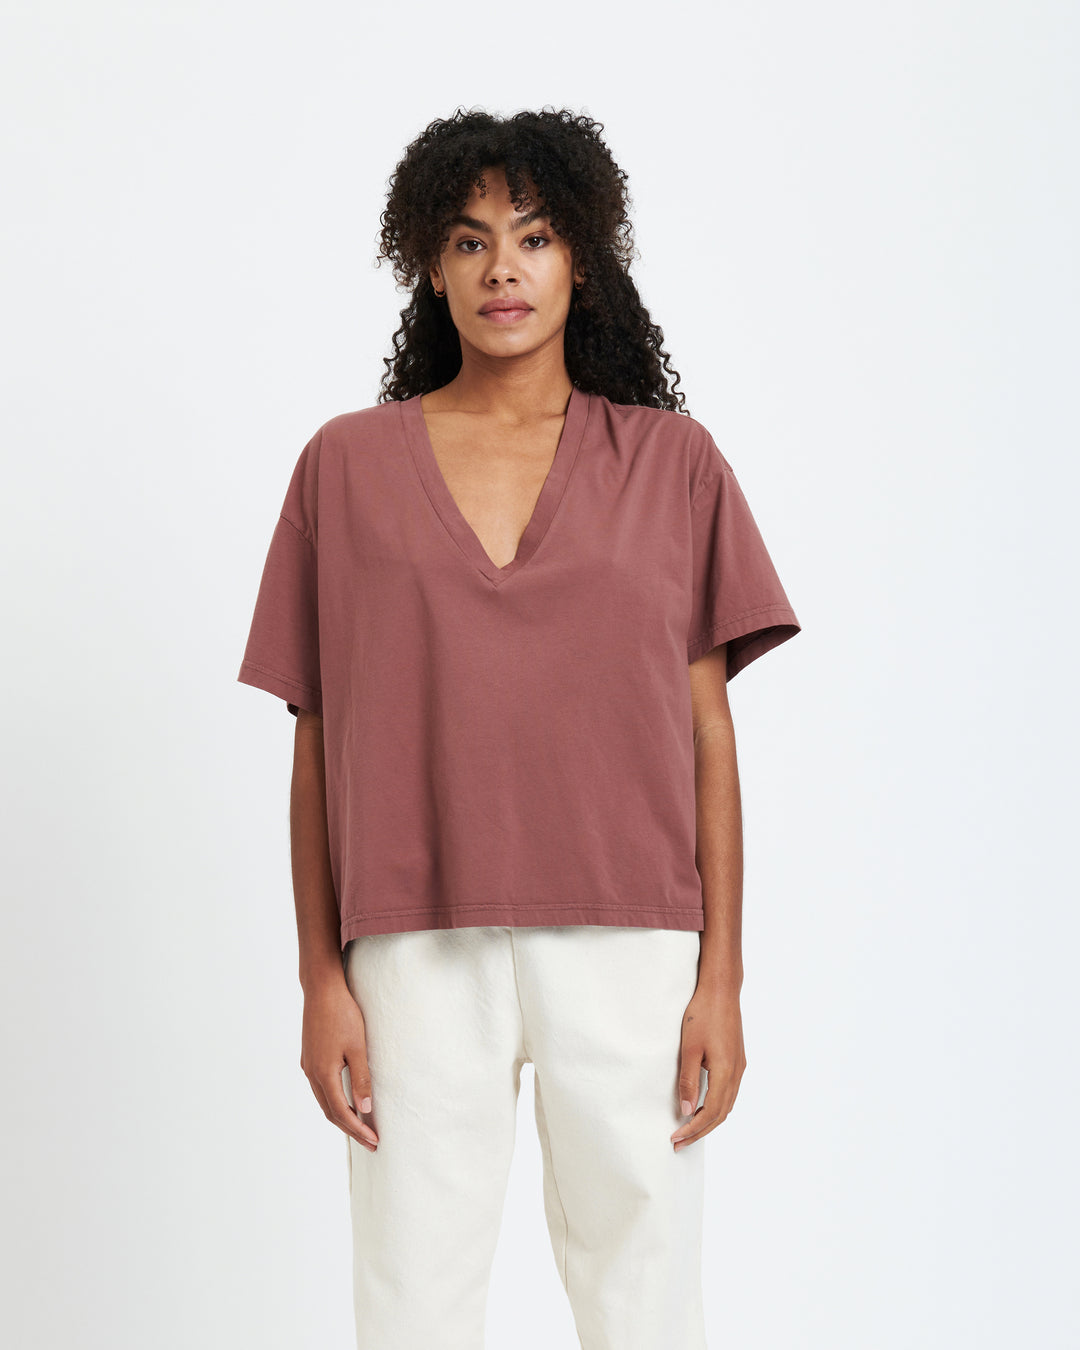 New Optimist womenswear V-neck garment dyed T-shirt T-shirt